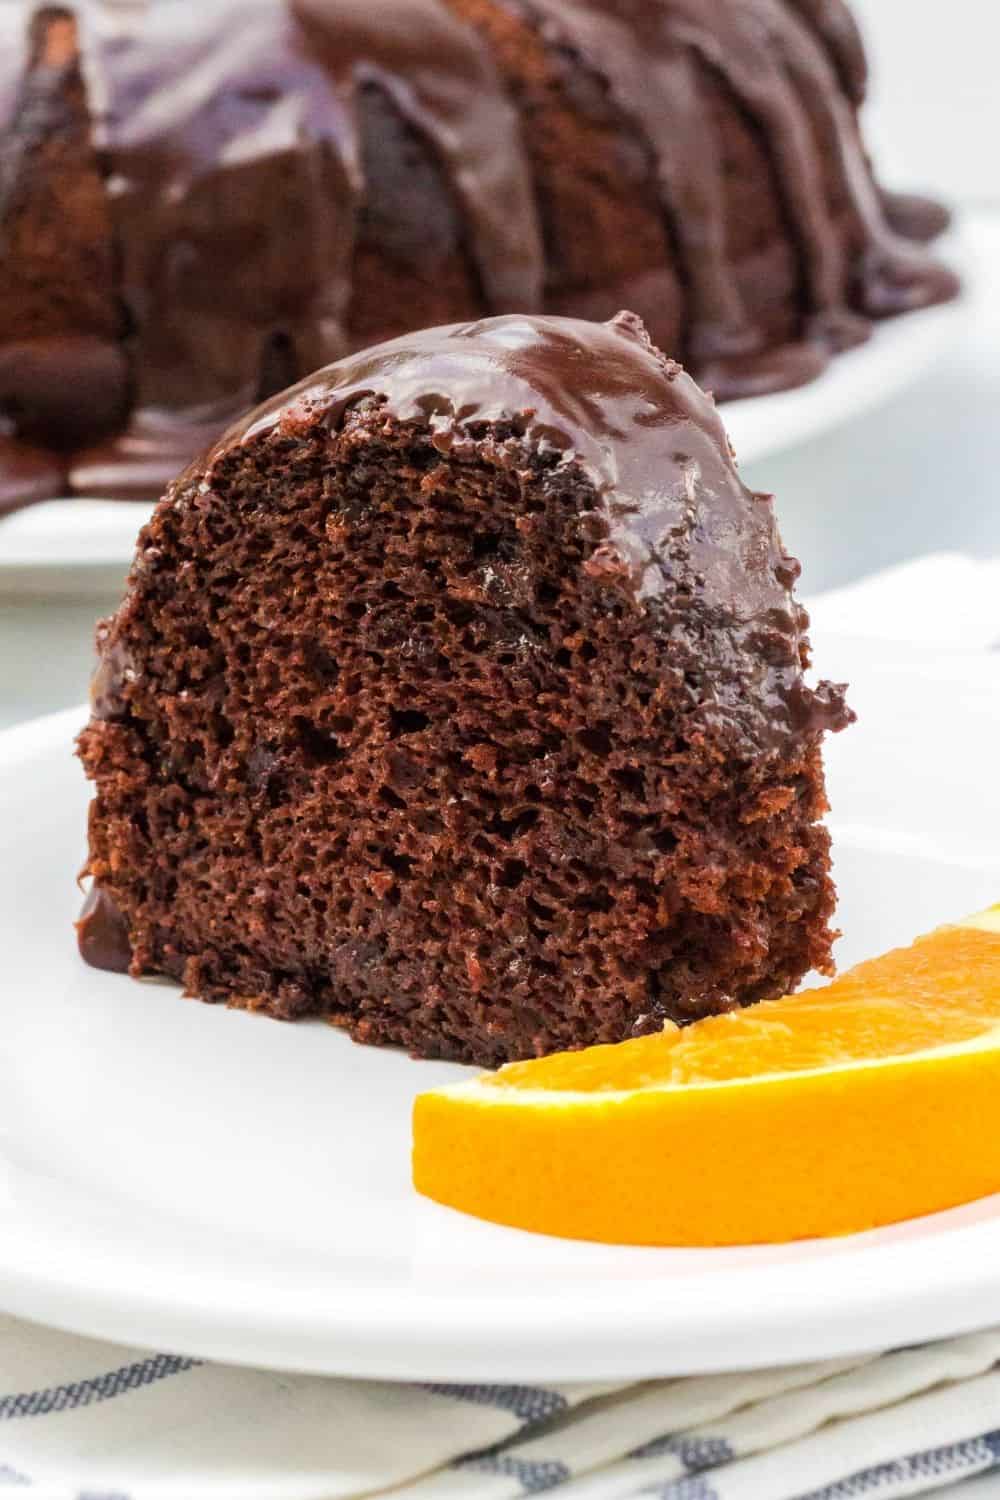 Slice of orange chocolate bundt cake served on a white plate with a garnish of sliced orange